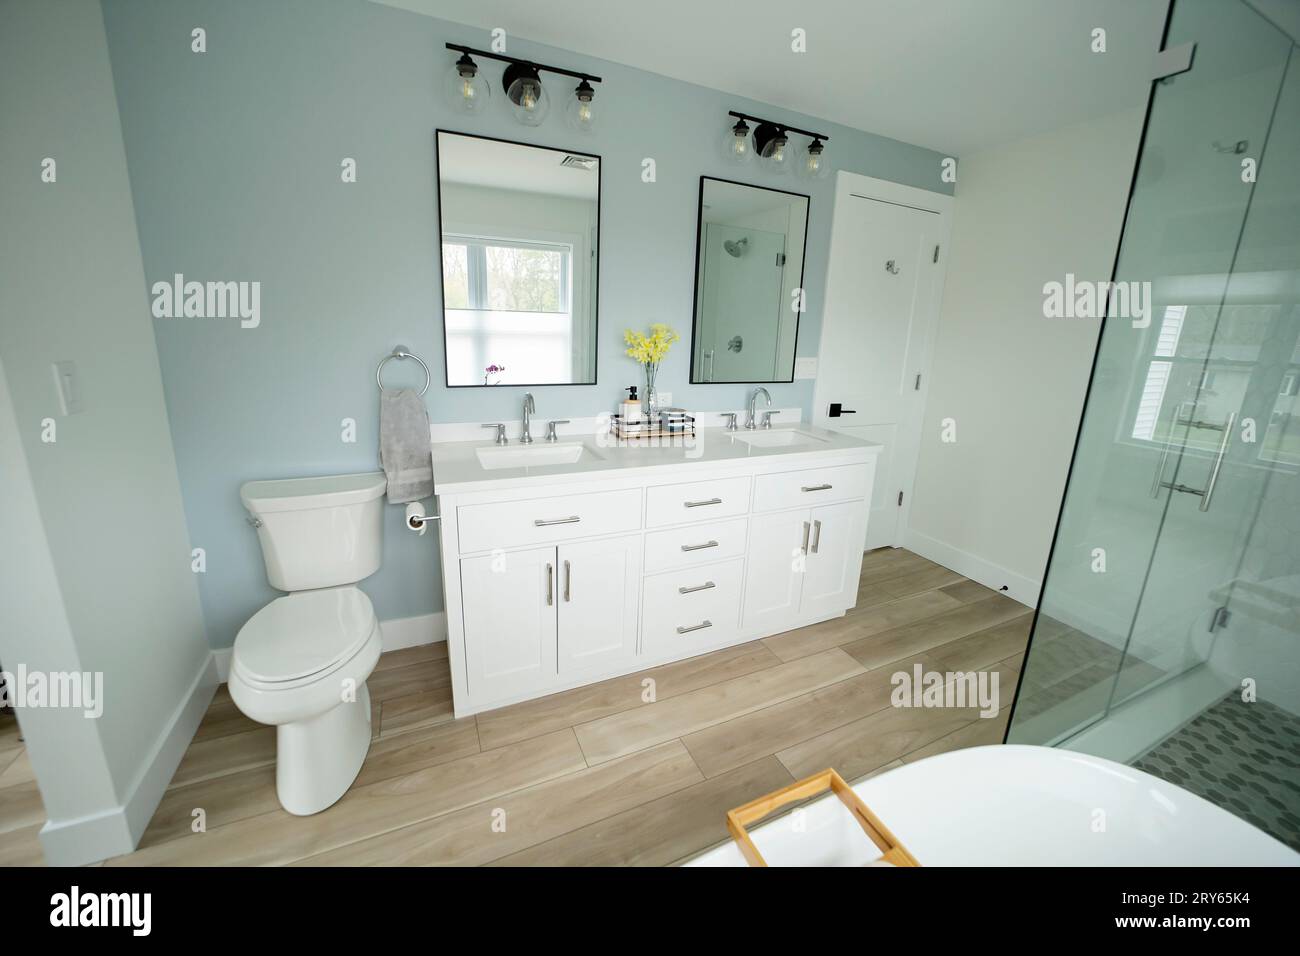 Modern double vanity, showcasing functionality in bathroom design Stock Photo